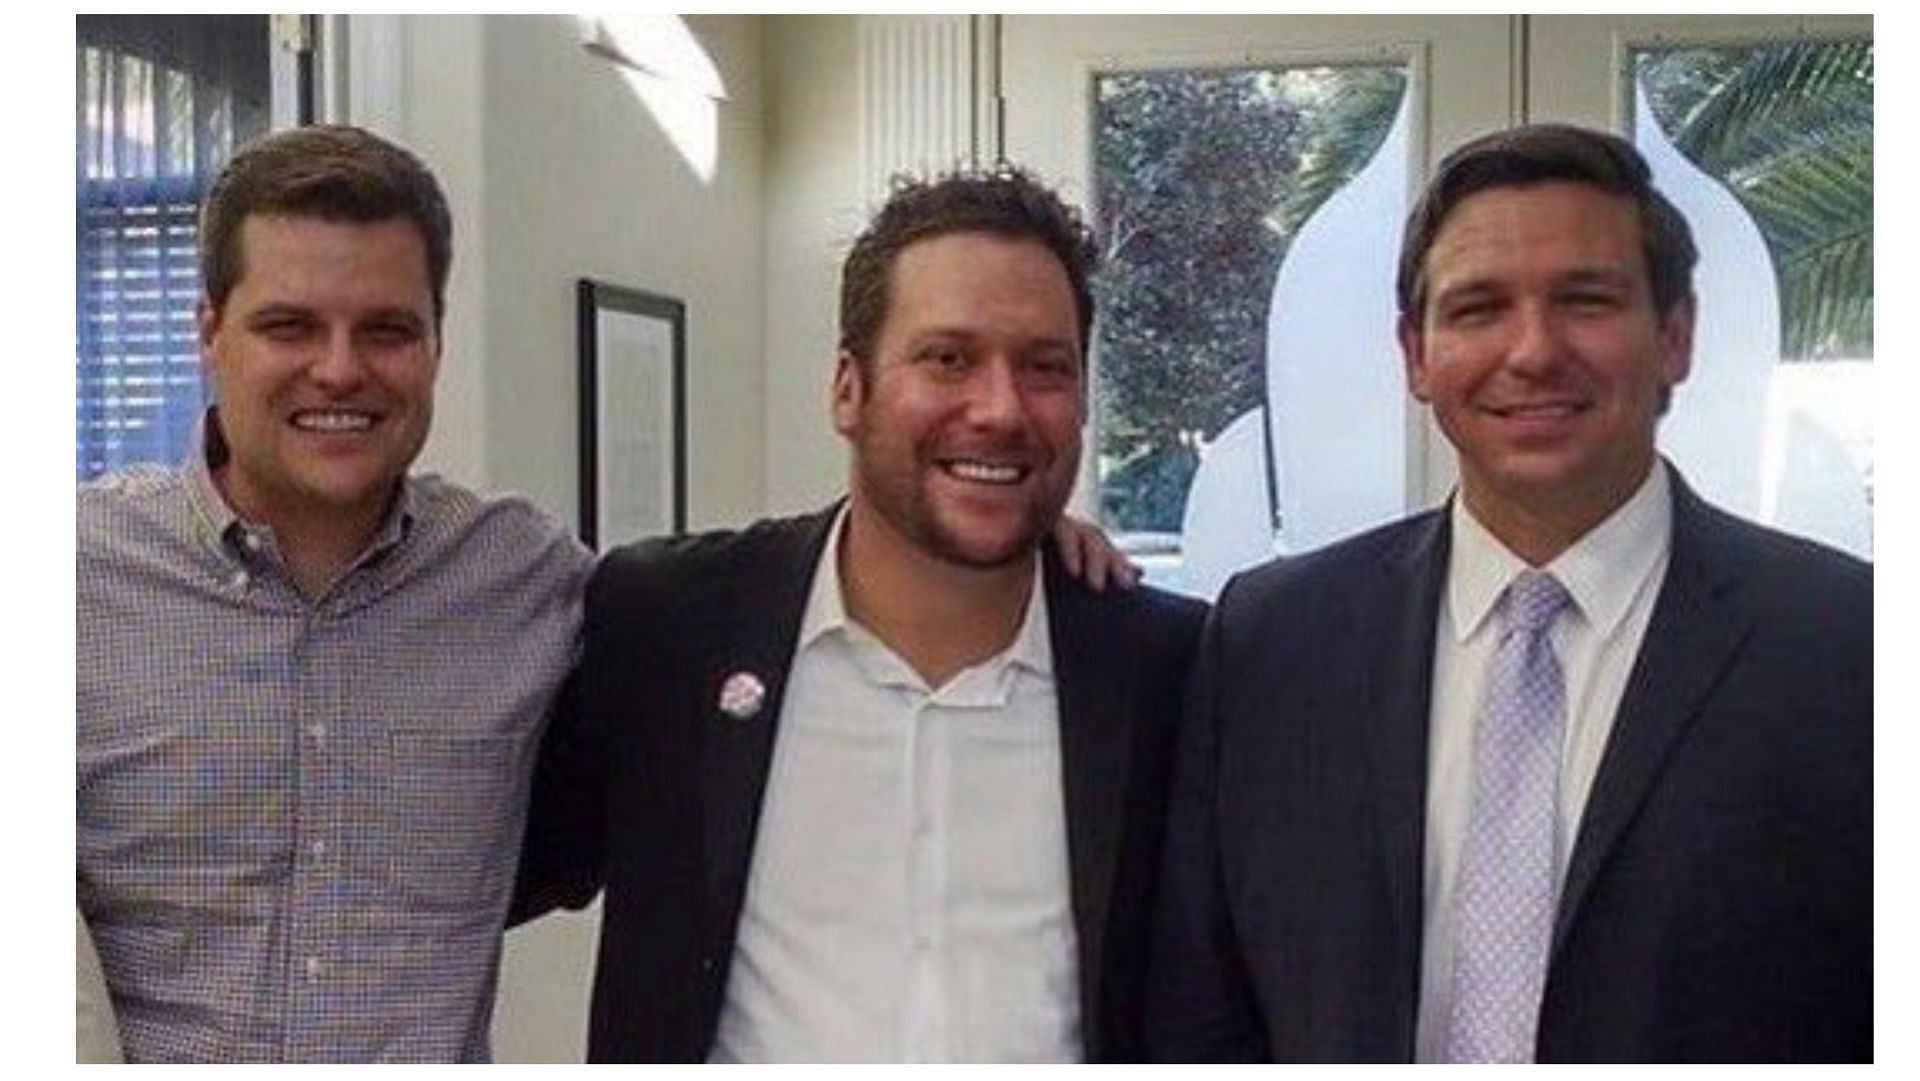 Joel Greenberg (middle) with Matt Gaetz (left) and Ron DeSantis (right). (image via @tomiahonen/Twitter)